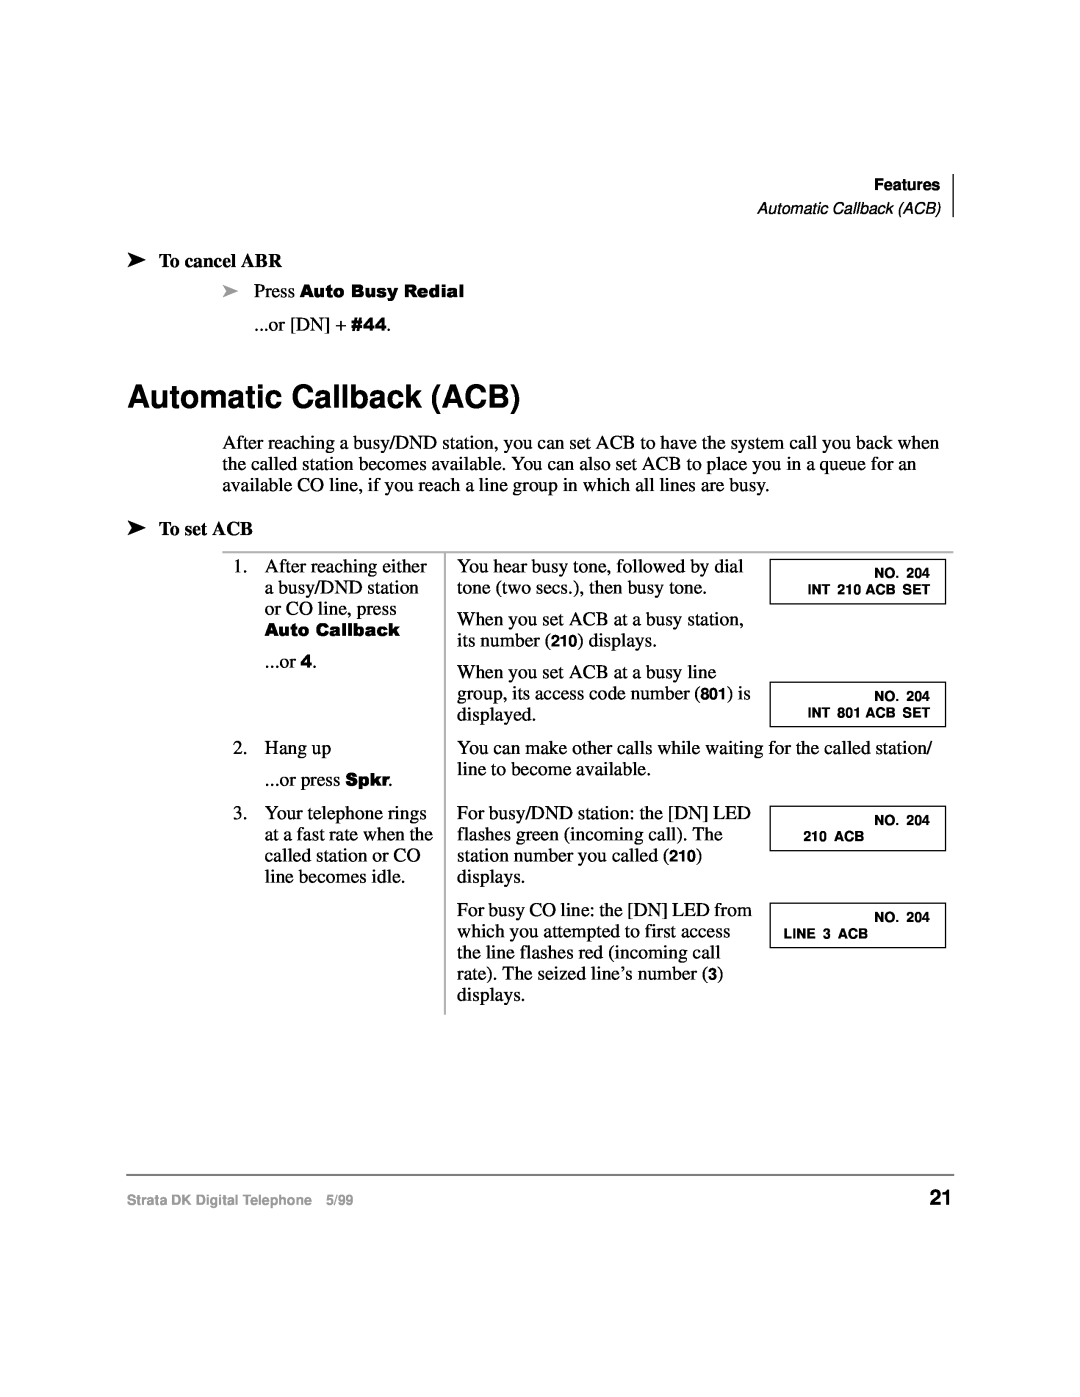 Toshiba CT manual Automatic Callback ACB, To cancel ABR, To set ACB 